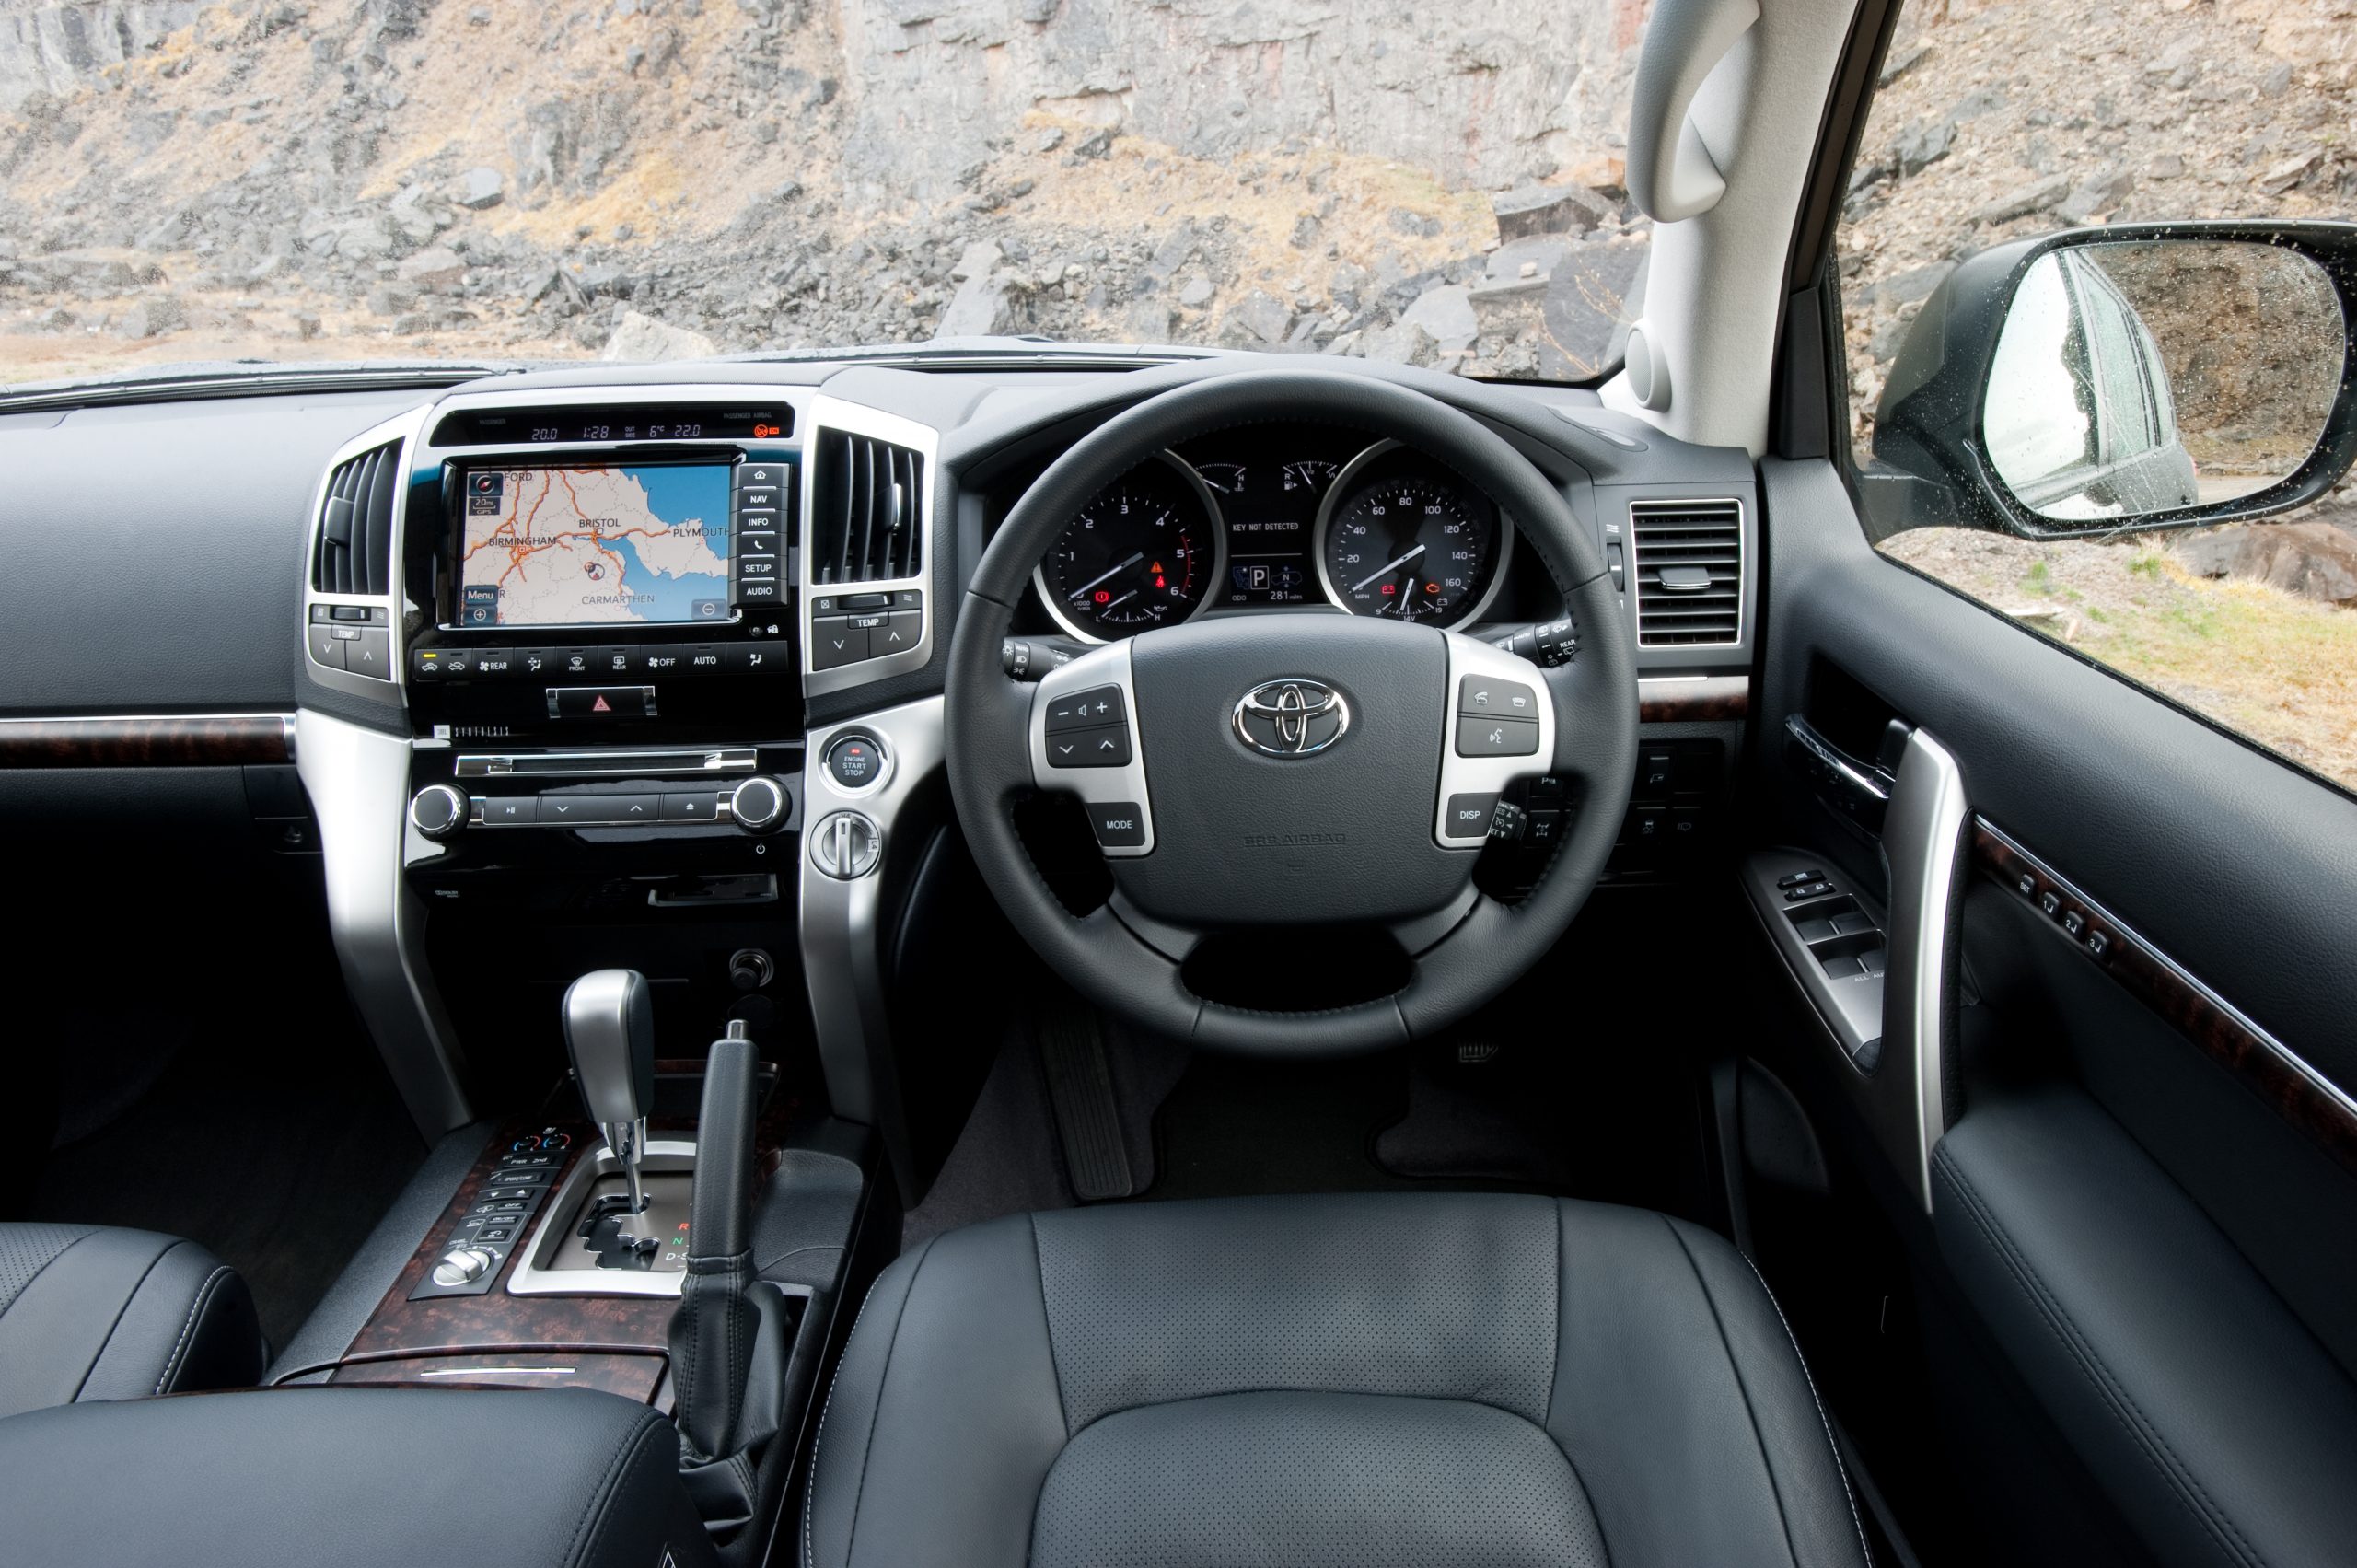 Крузер 200 2012 год. Toyota Land Cruiser 200 v8. Toyota Land Cruiser 200 Interior. Toyota Land Cruiser 200 2012. Тойота ленд Крузер 200 салон.